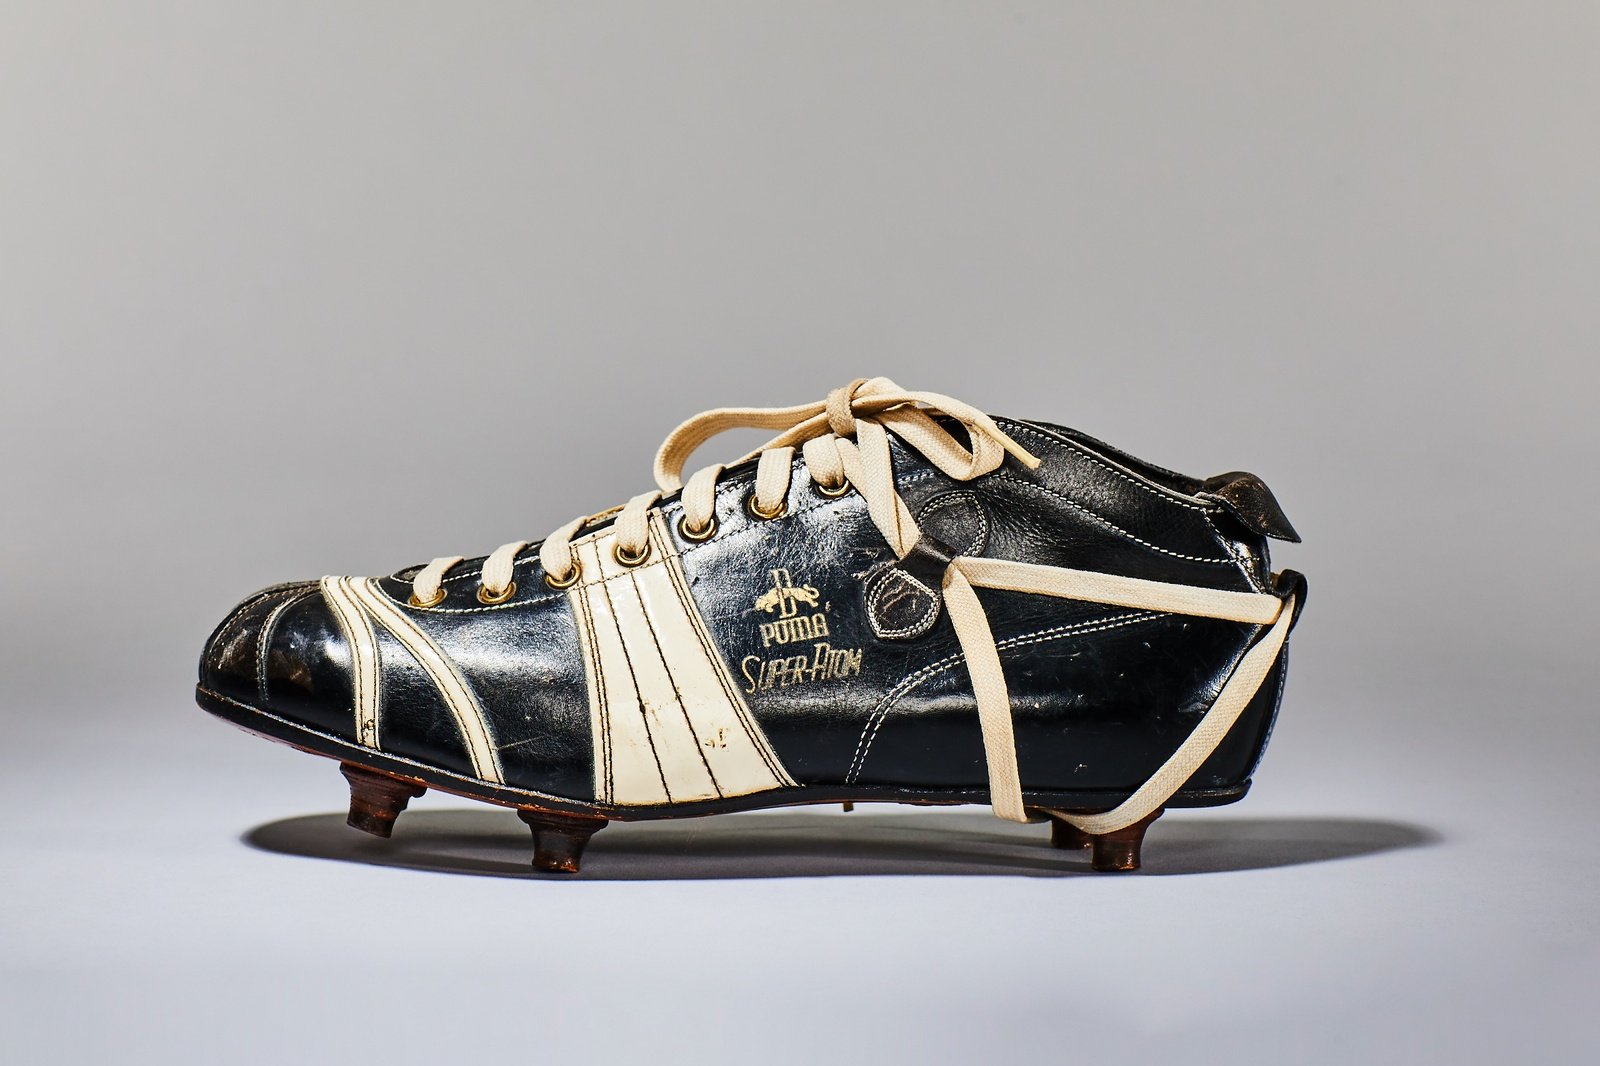 Historic Puma football boots. Source: Design Museum